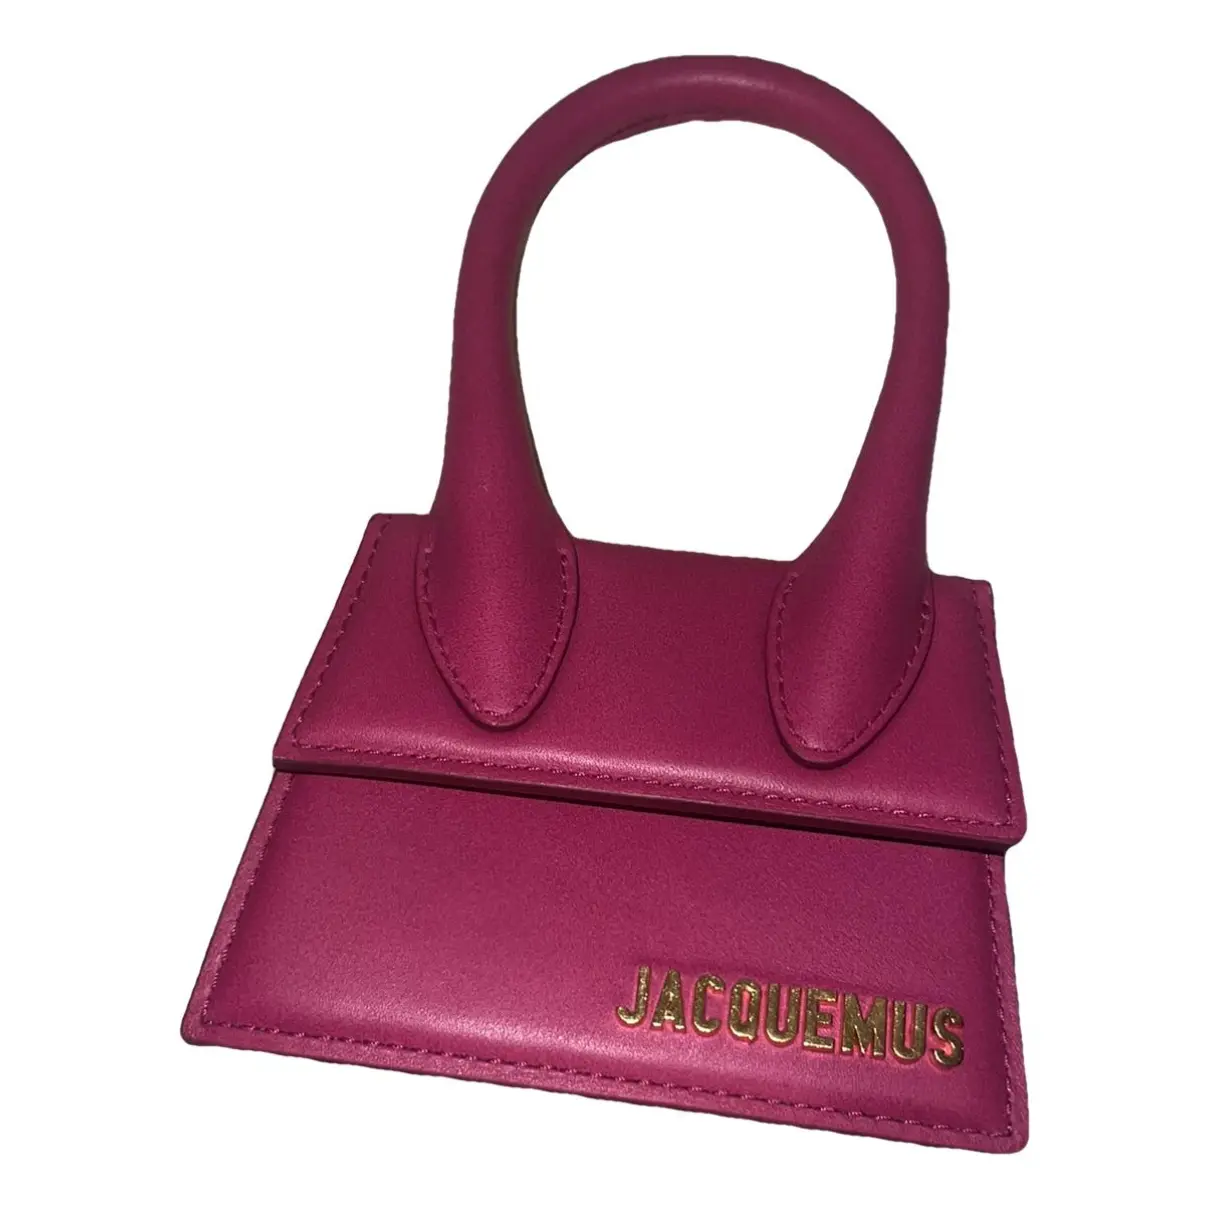 Chiquito leather handbag